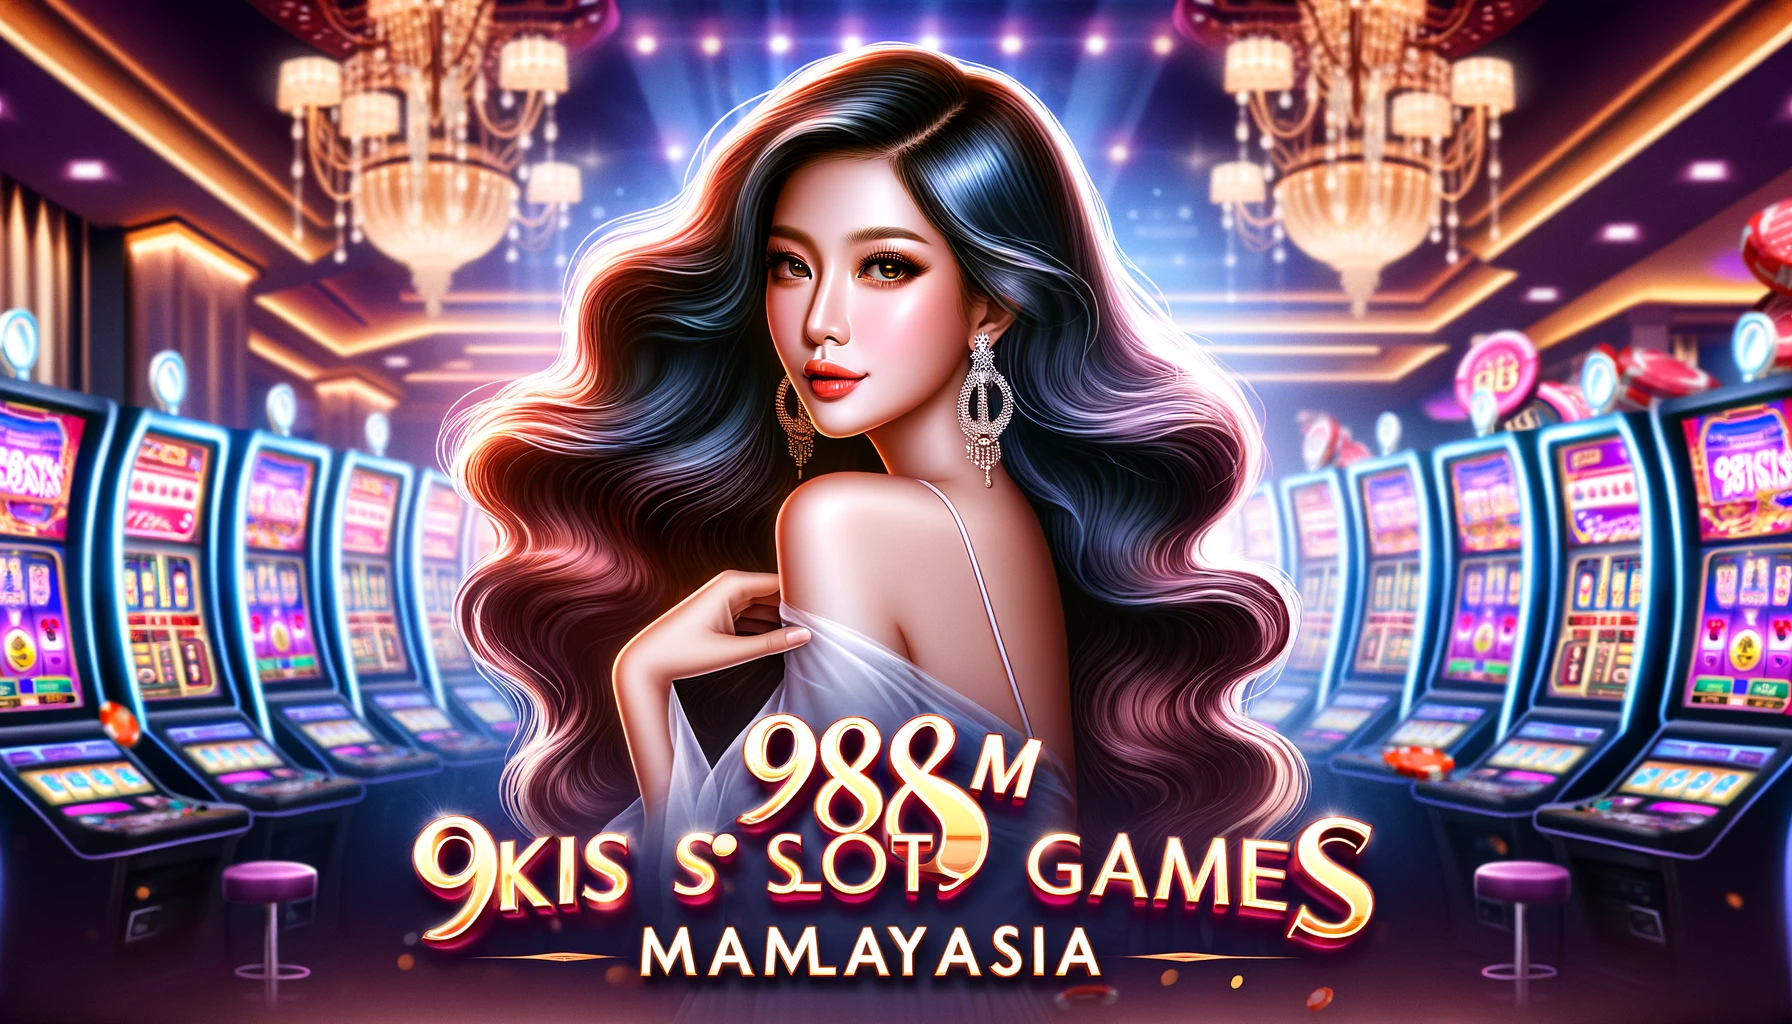 96M 918Kiss Slot Games Malaysia